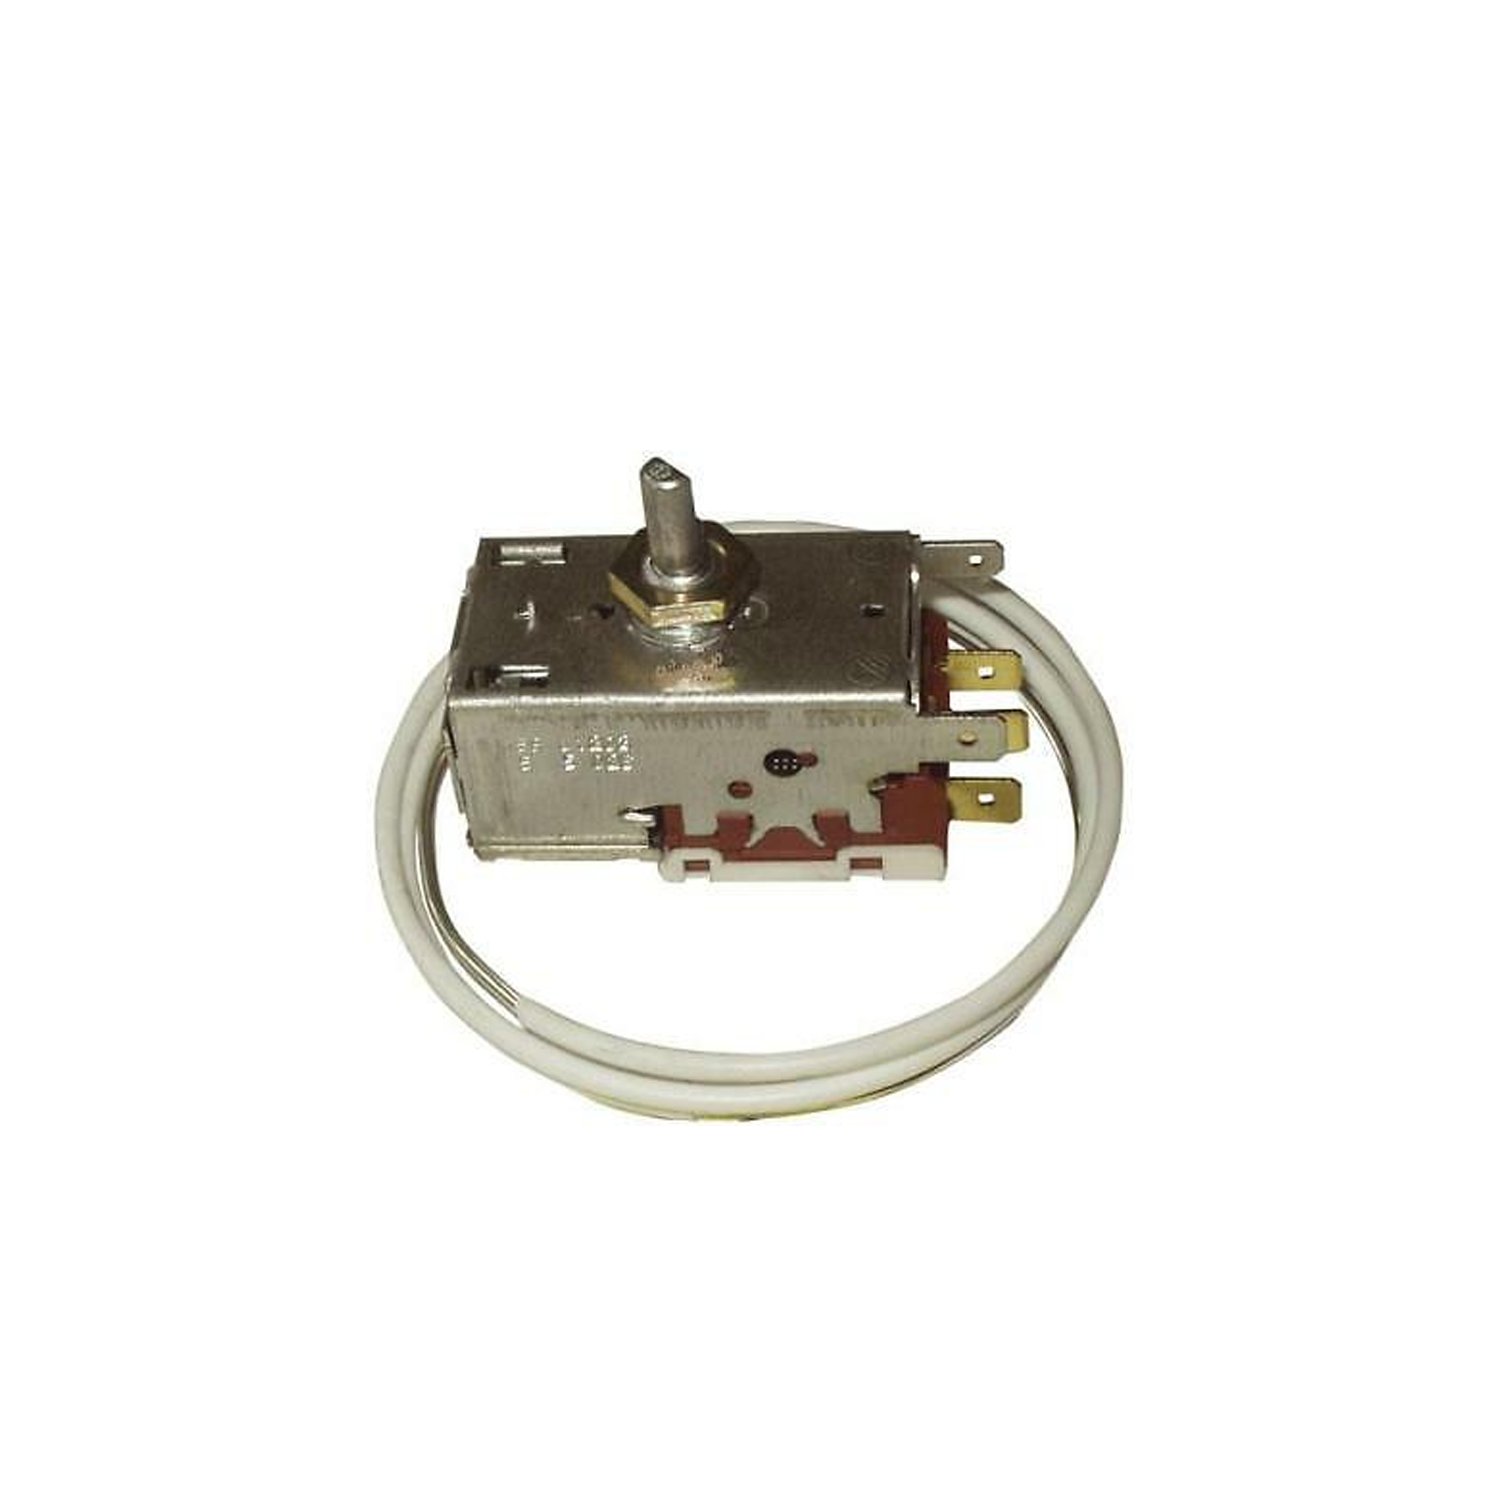 Thermostat Ranco K59L1203 (Atea A13-0172, Danfoss 077B6449) for ROBERTSHAW, ARISTON, refrigerator: -13.5 ° C, cold: -24 ° C, L 700mm, 3 contacts